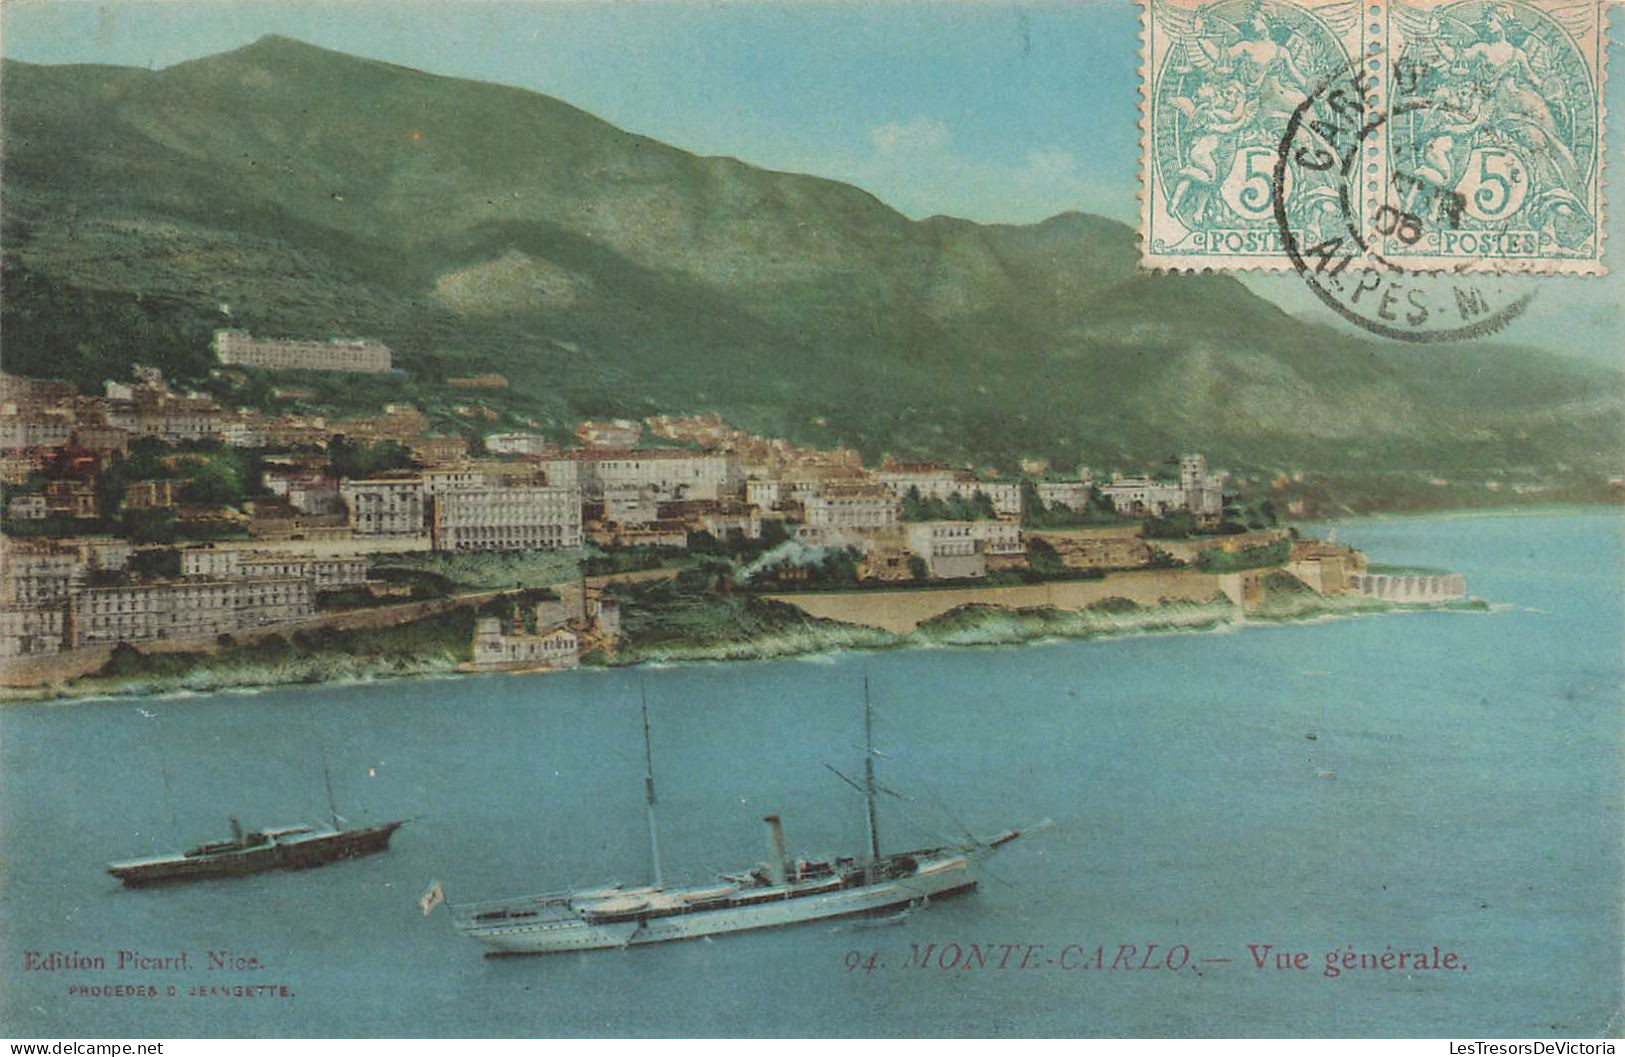 MONACO - Monte Carlo - Vue Générale - Carte Postale Ancienne - Monte-Carlo